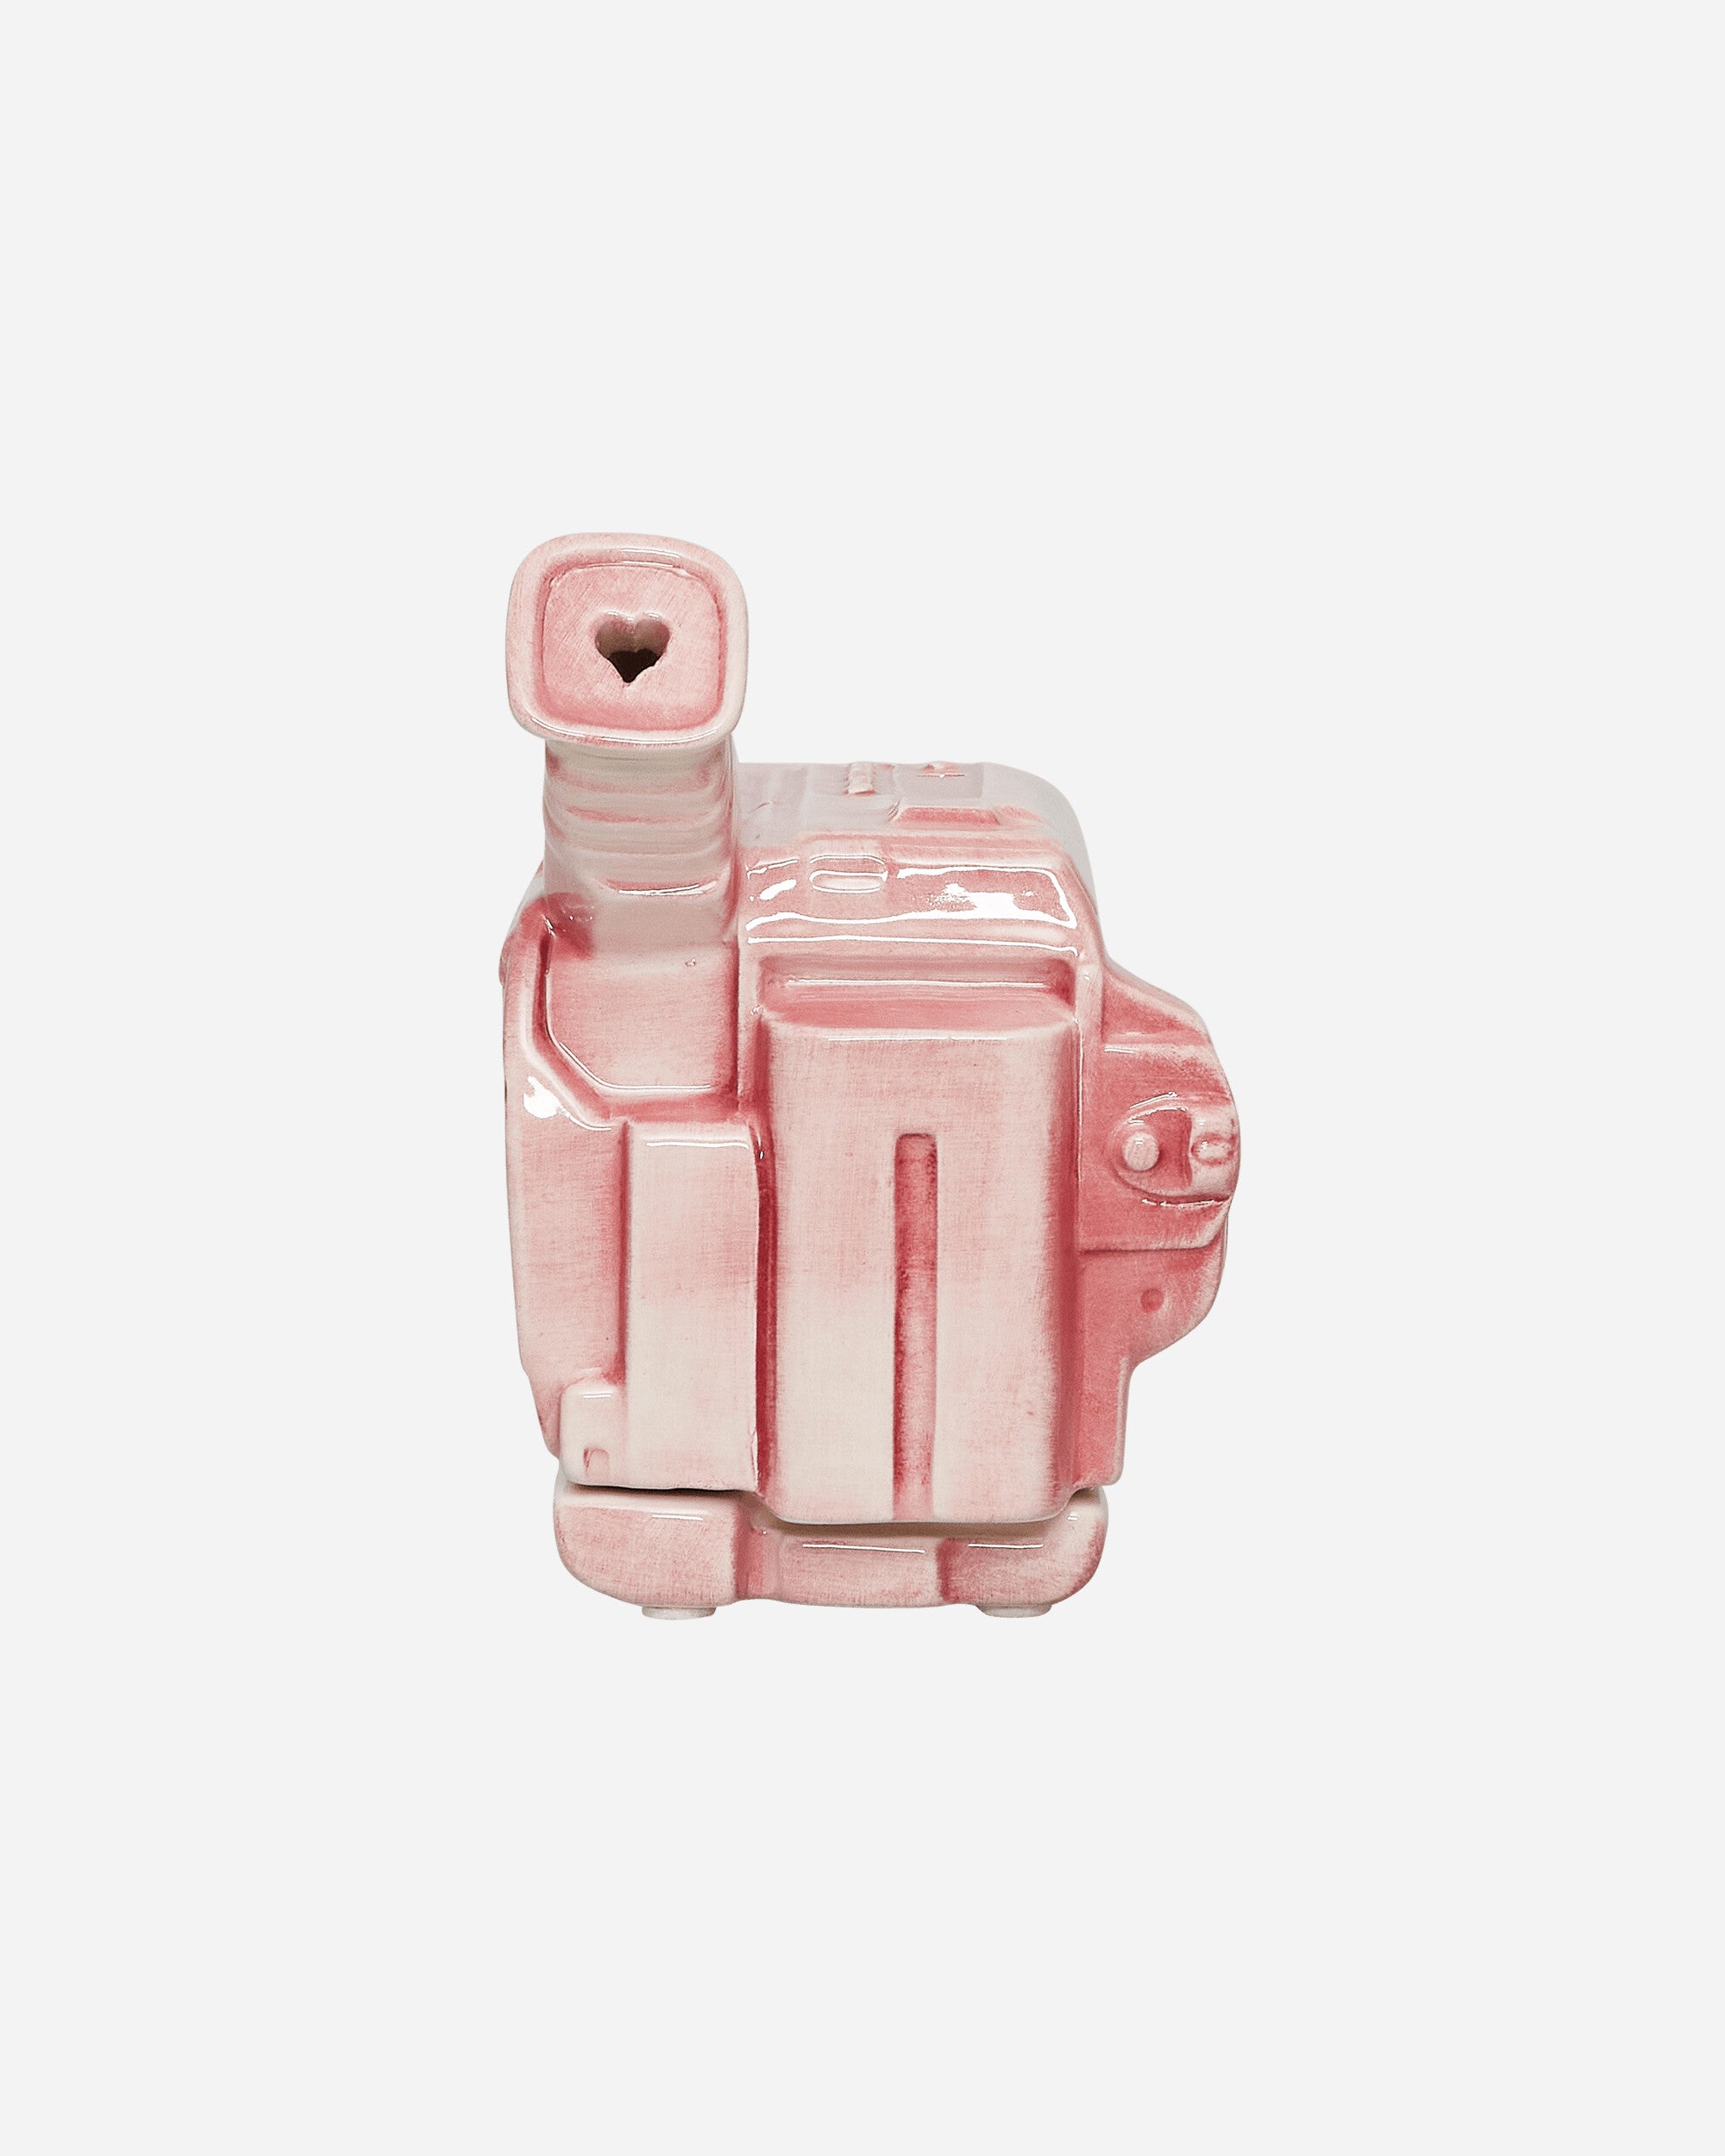 Iuter IUTER X No Text Camera Kombat Incense Holder Pink Home Decor Incenses and Holders 24SICF500 1